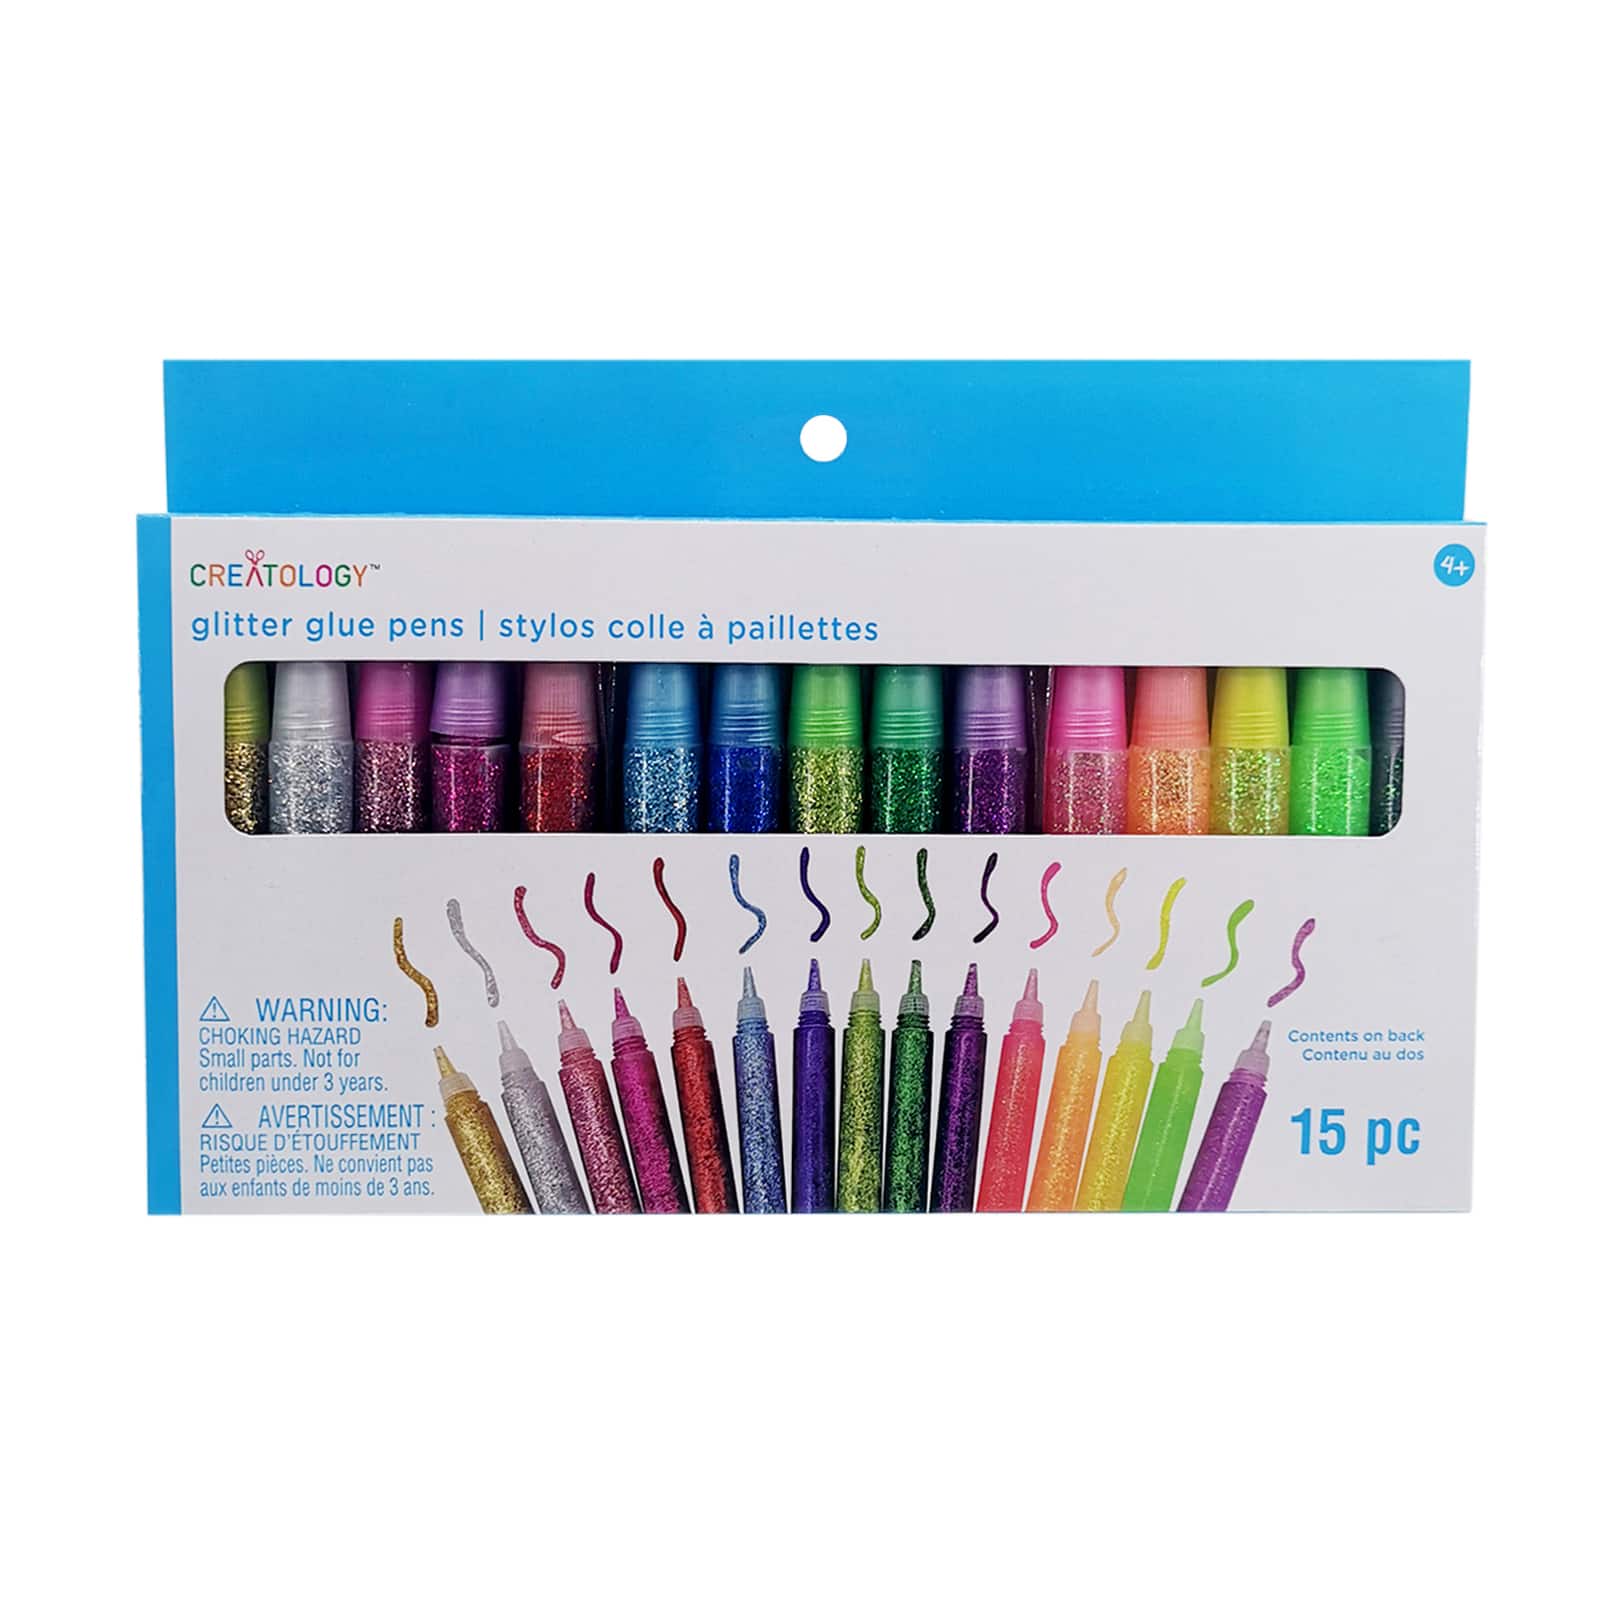 Glitter Glue Pens for Grad Caps/Tassel Topper - Assorted Colors